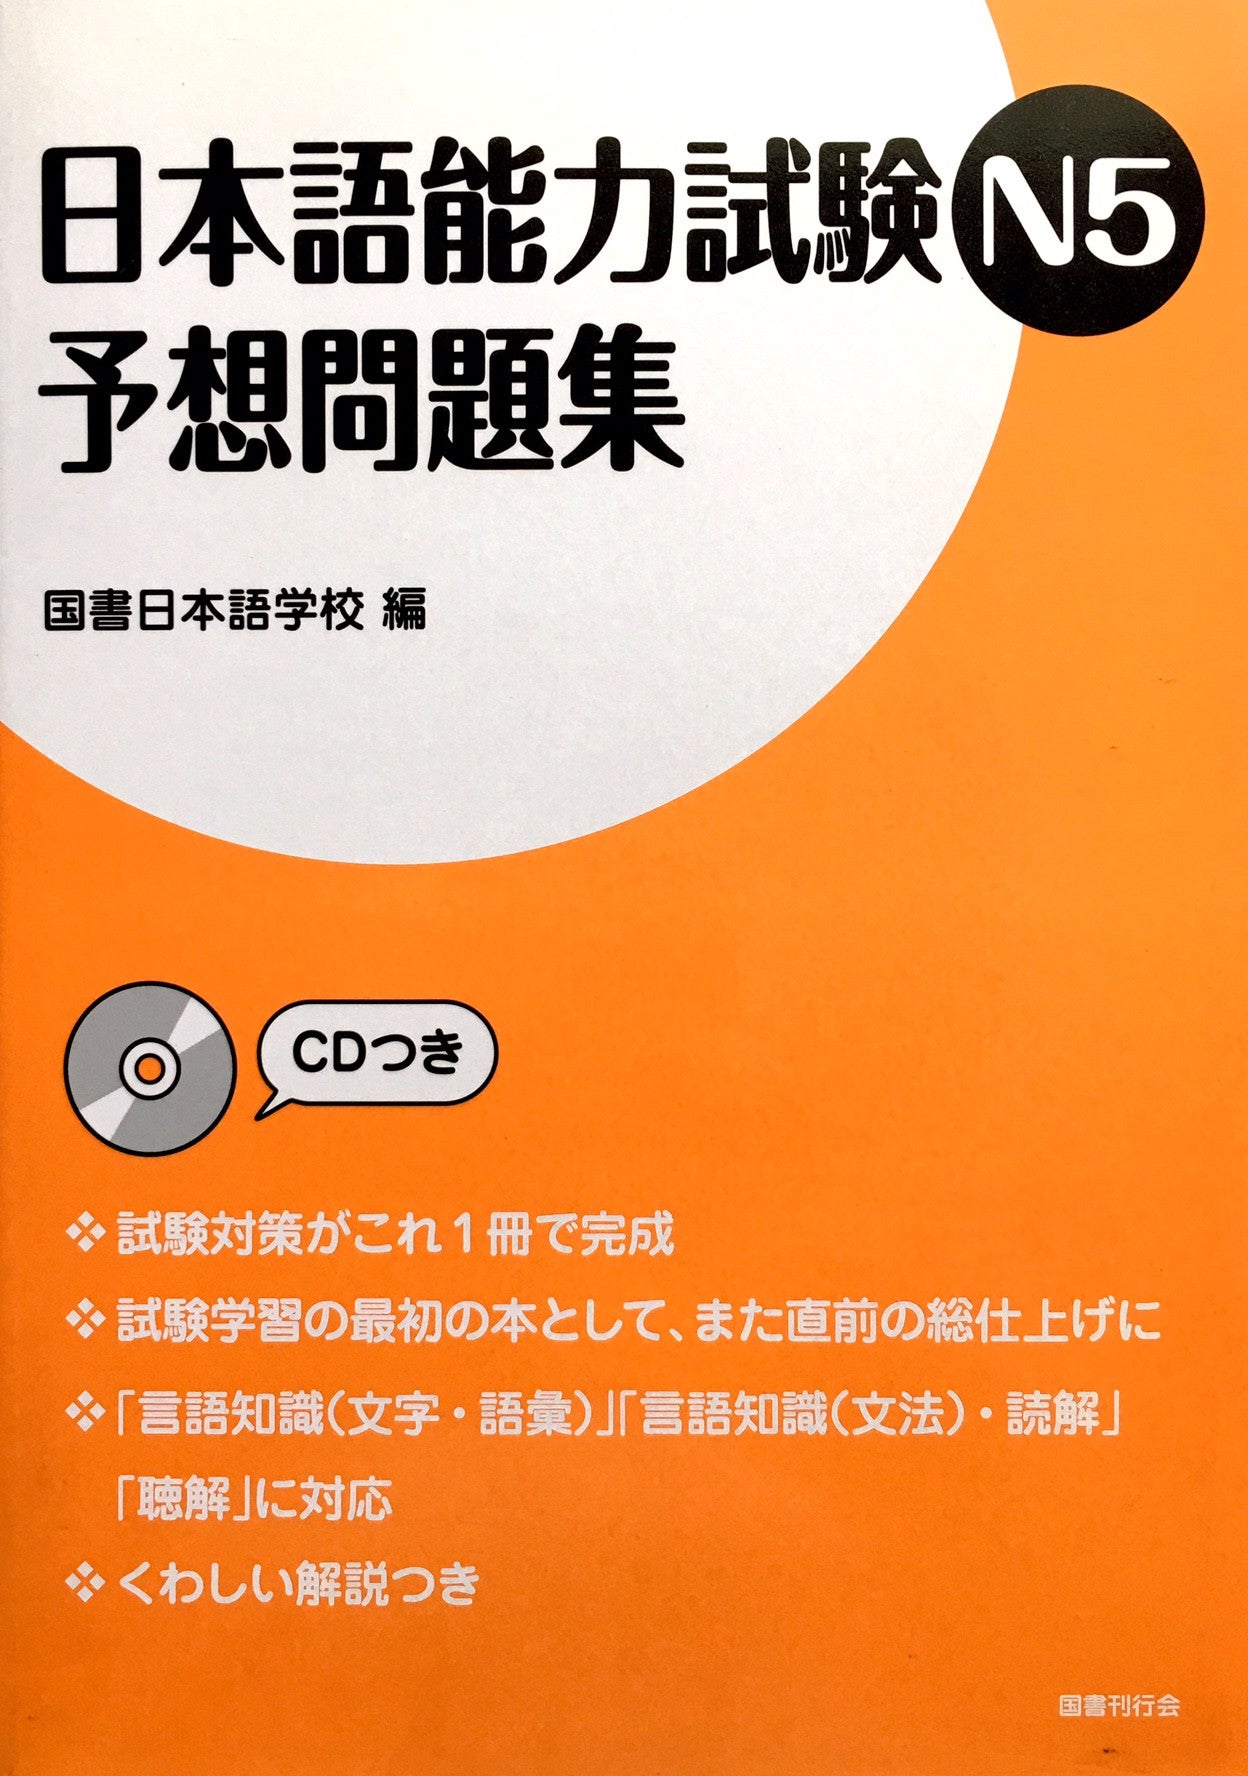 Nihongo Nouryokushiken N5 Yosoumondaishu JLPT N5 Complete Practice with CD - The Japan Shop